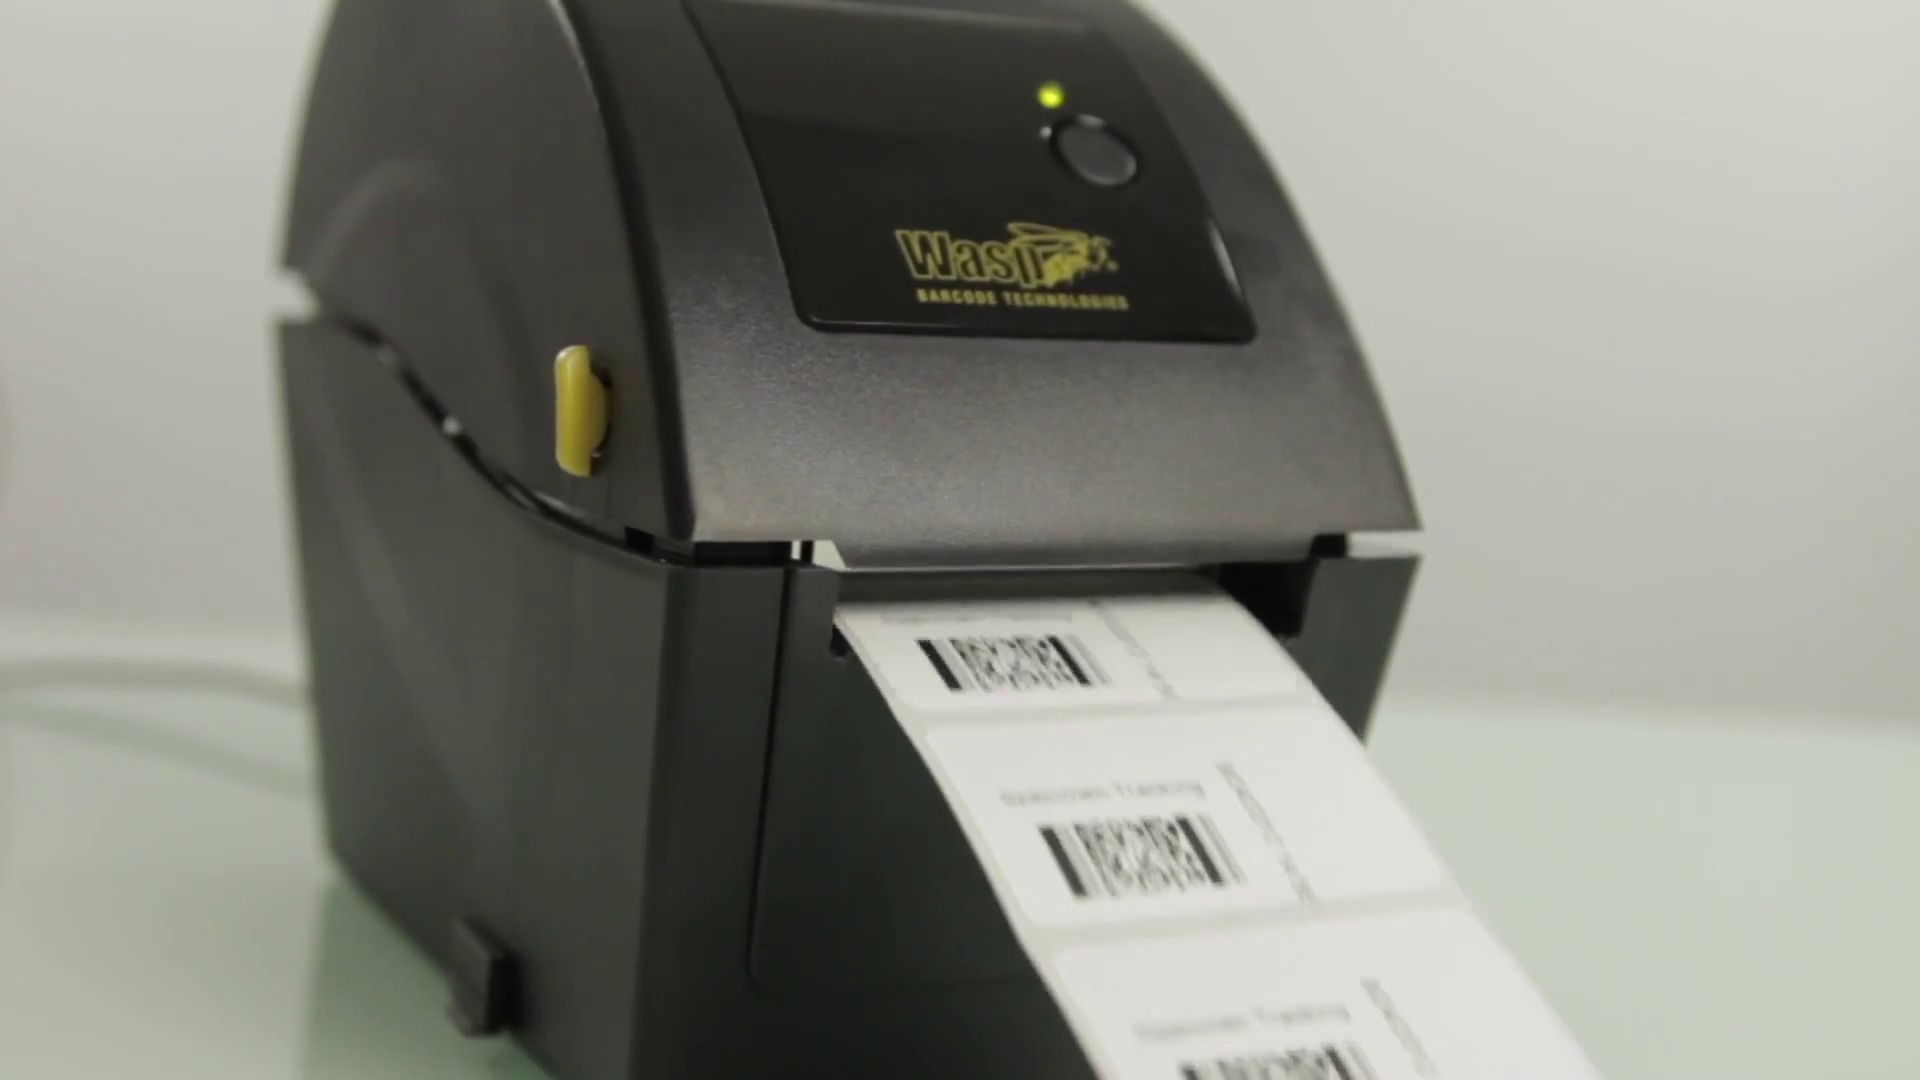 wasp barcode maker download